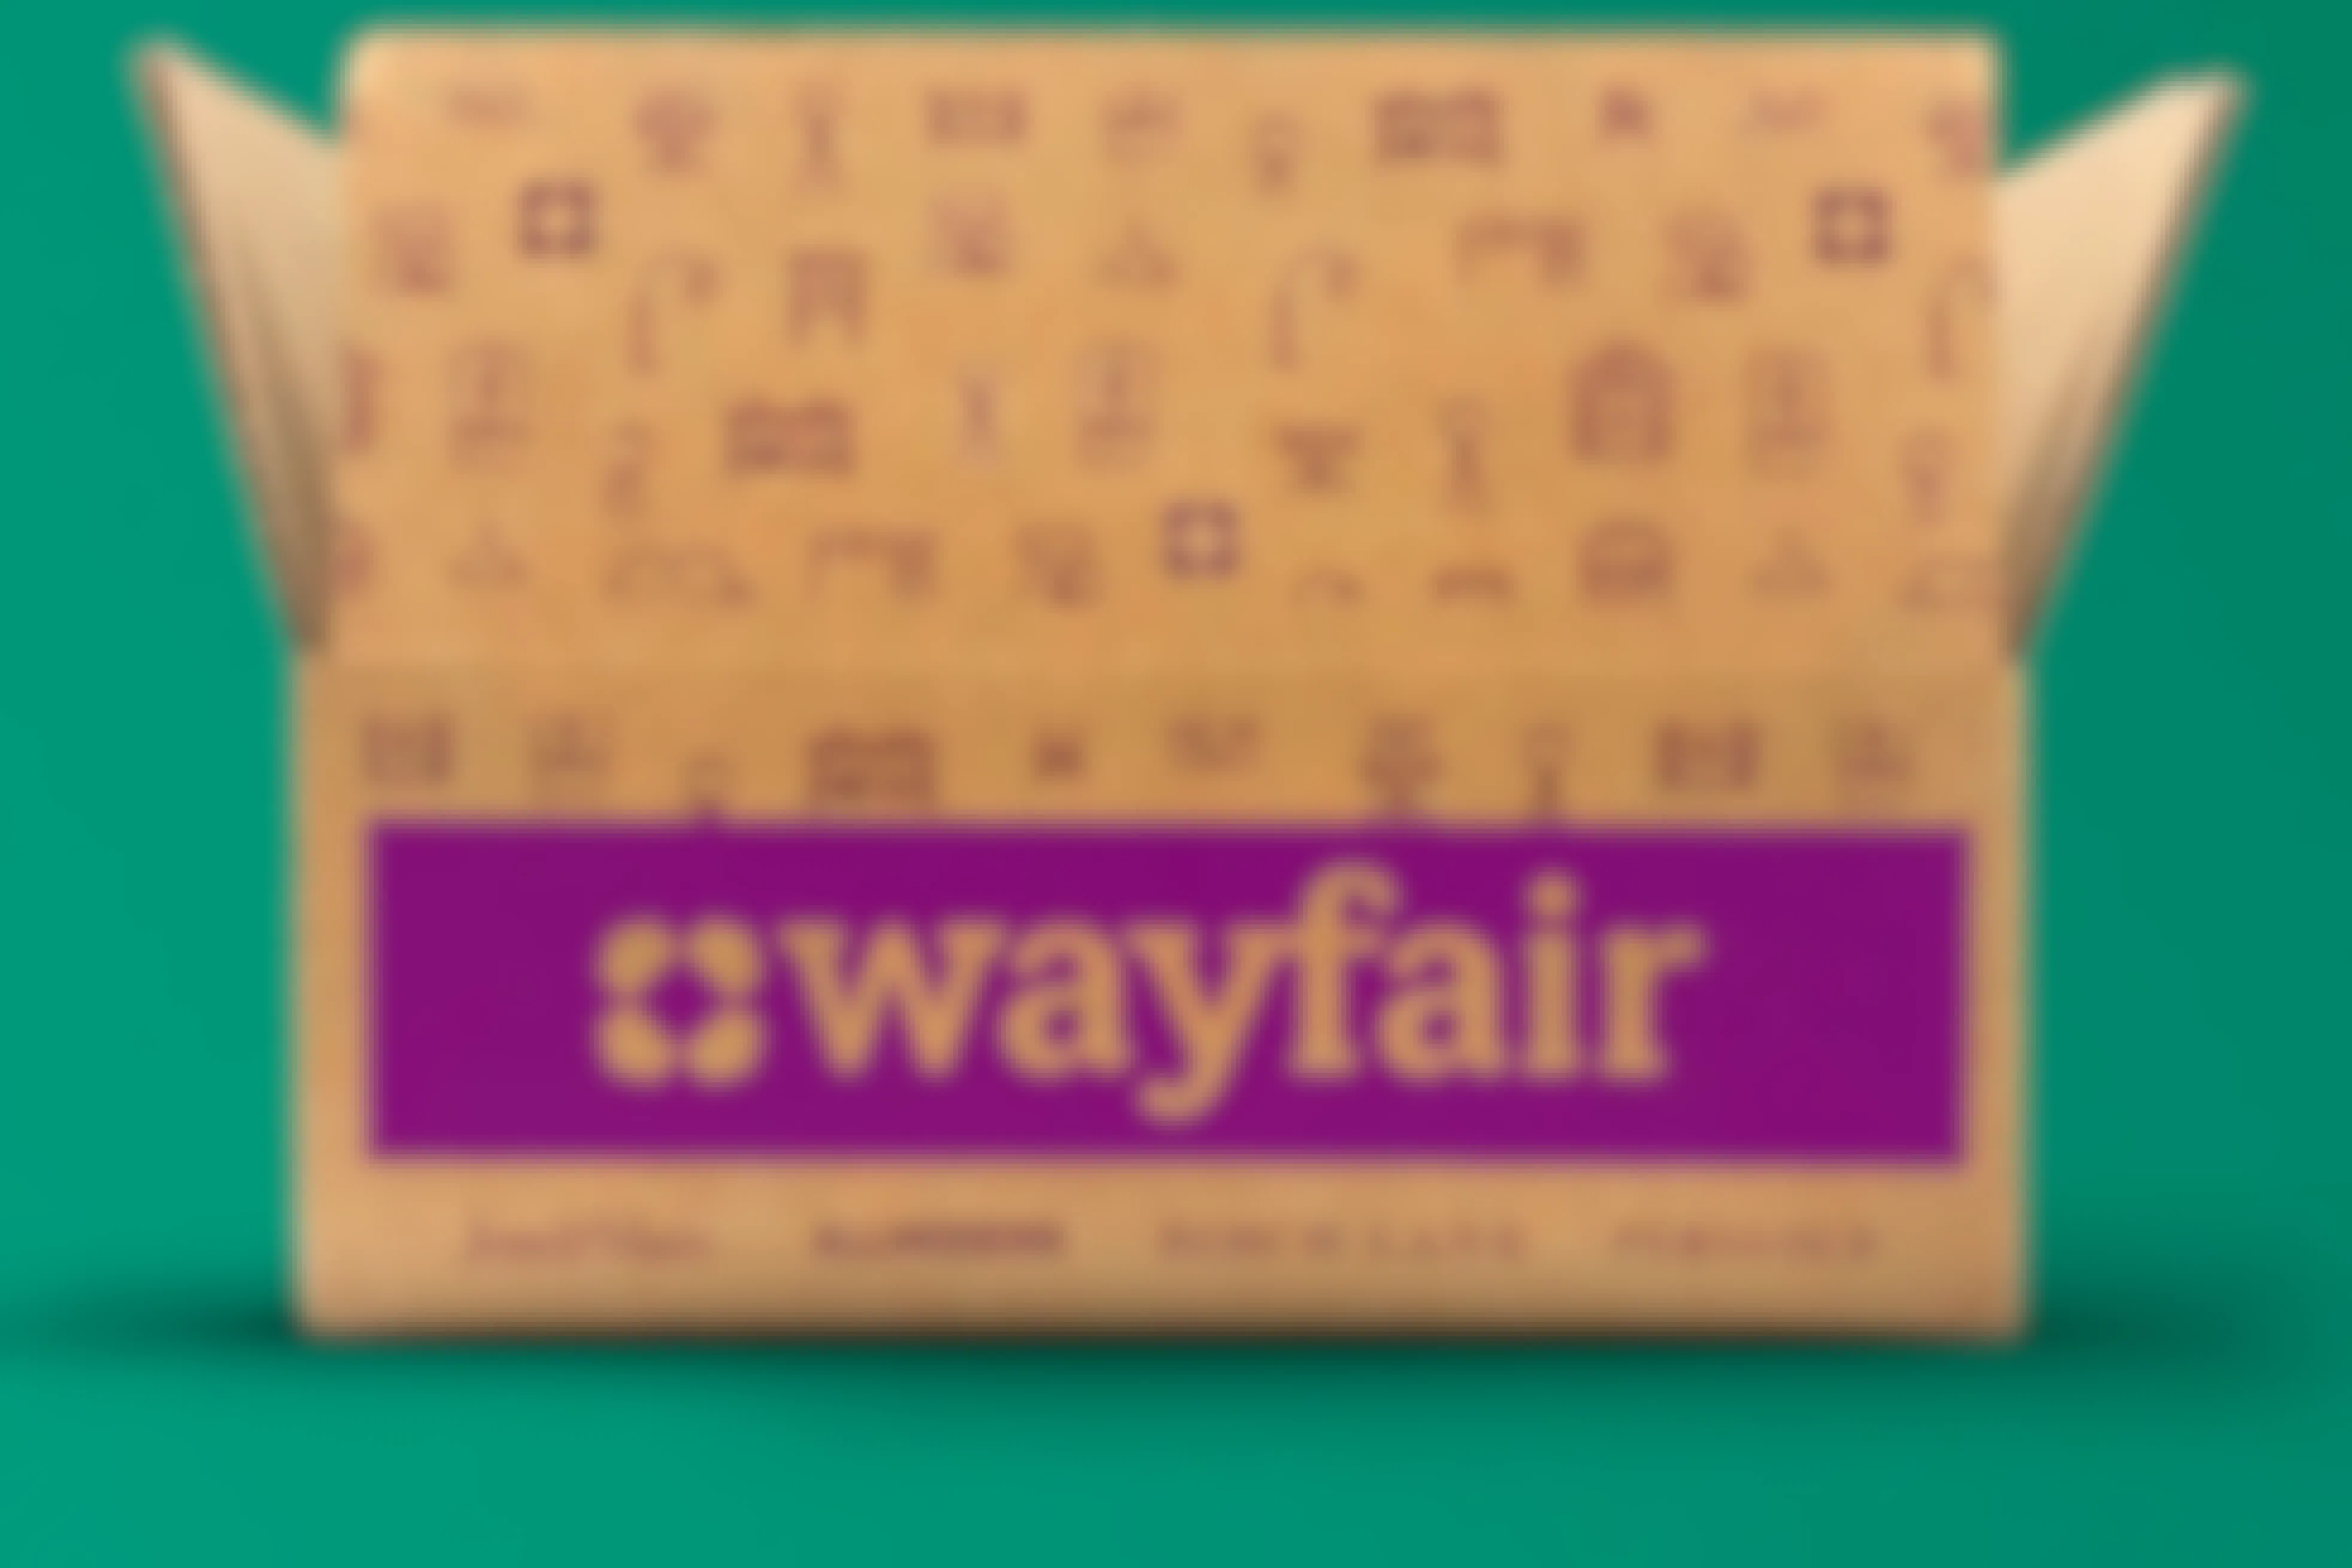 box with wayfair logo